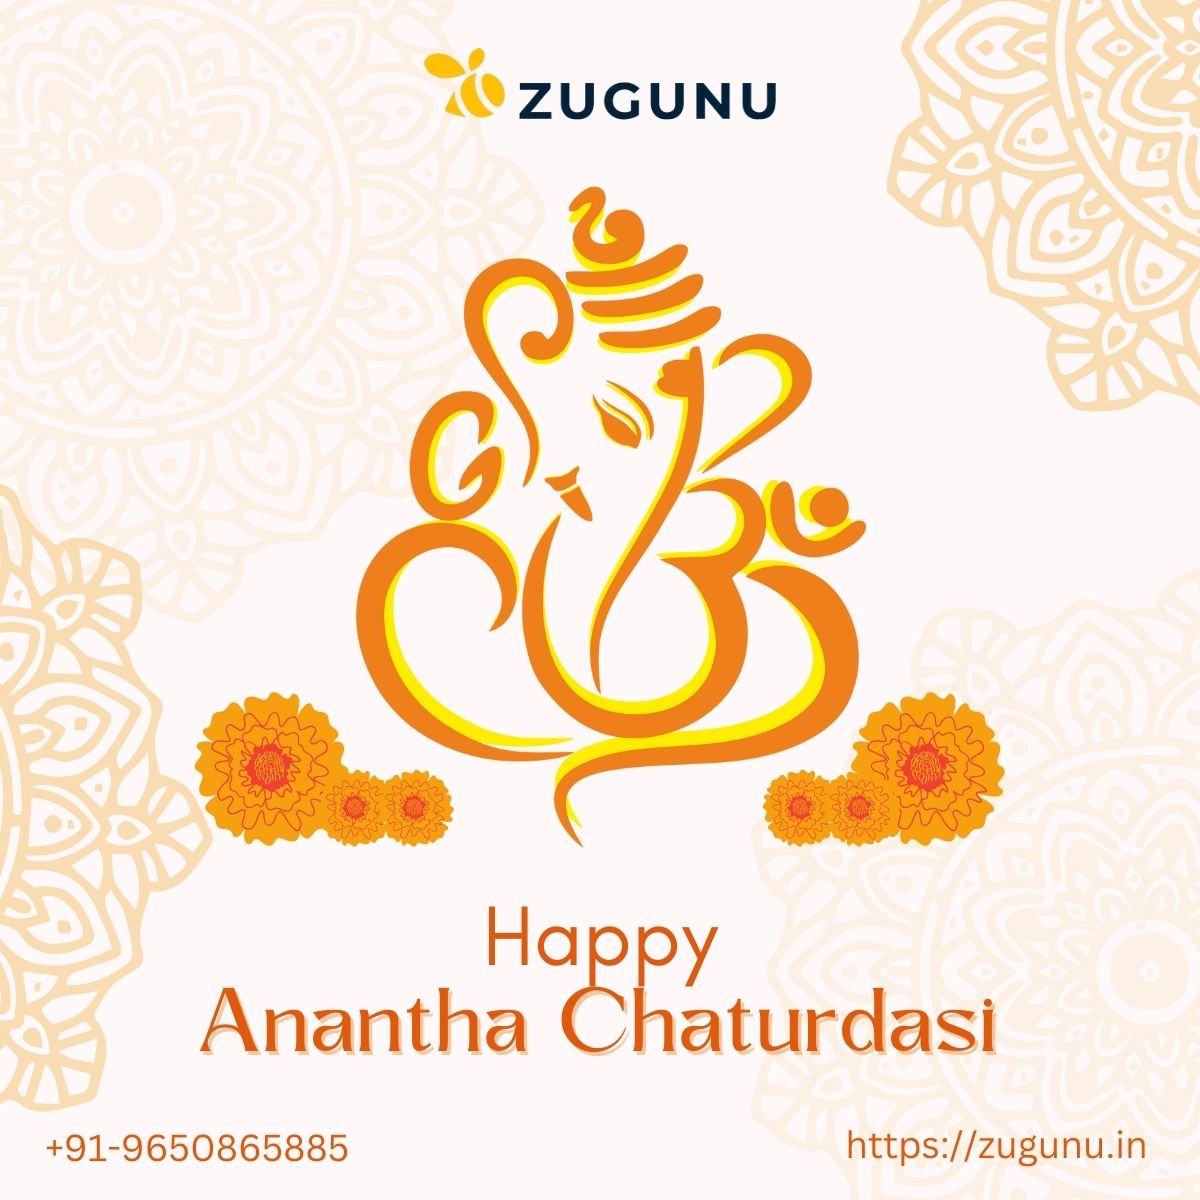 Wishing You a Blessed Anantha Chaturdasi From ZuGuNu